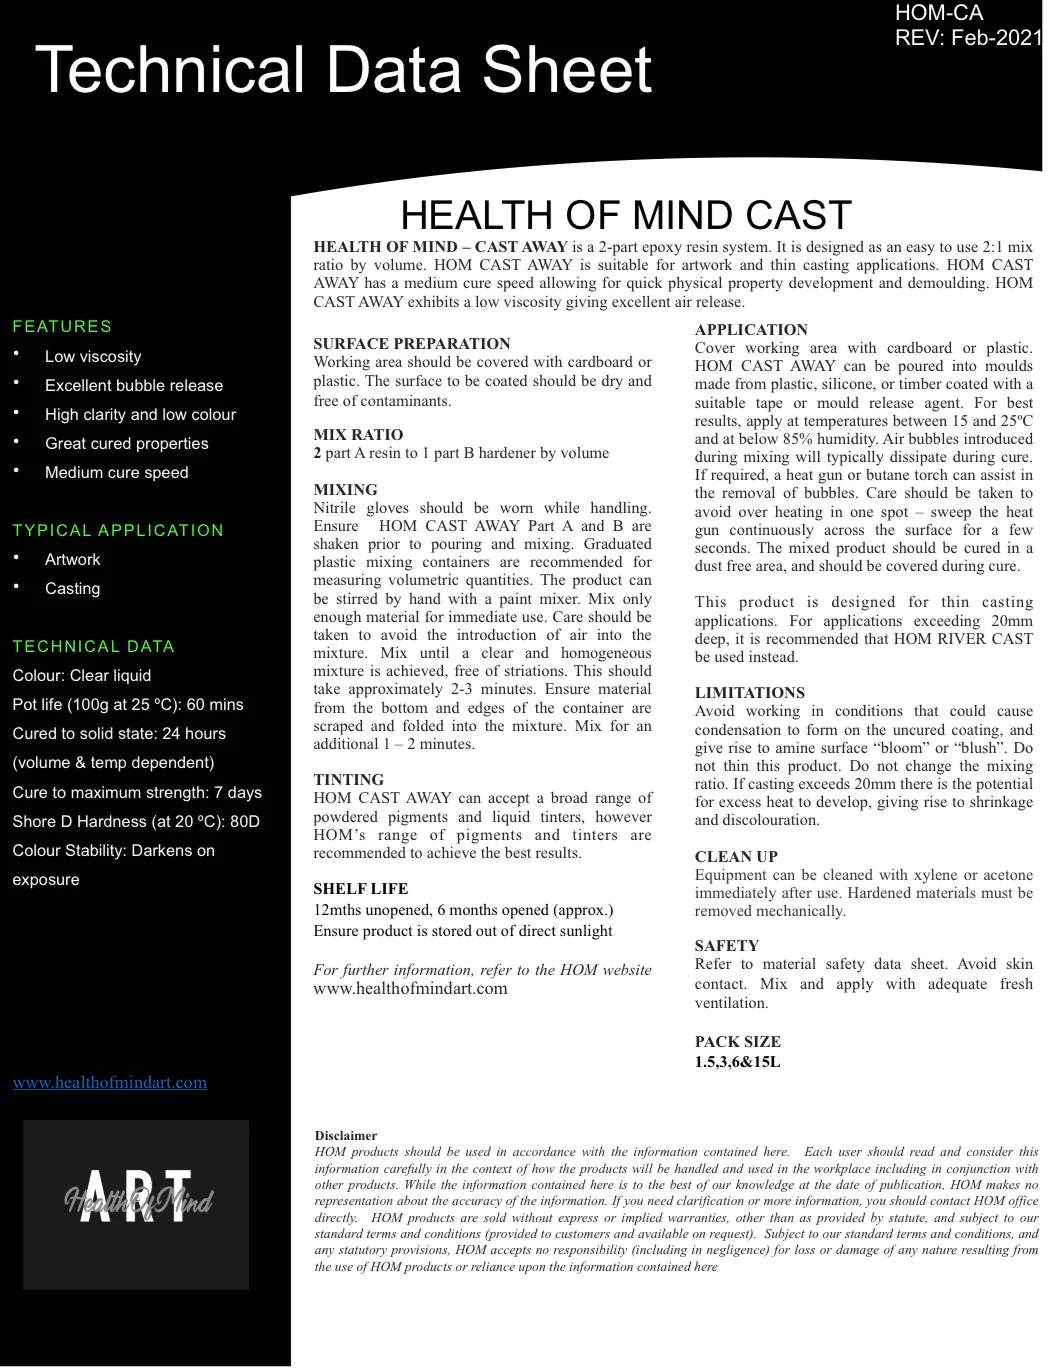 Cast Away Ultra Clear - Health Of Mind Art